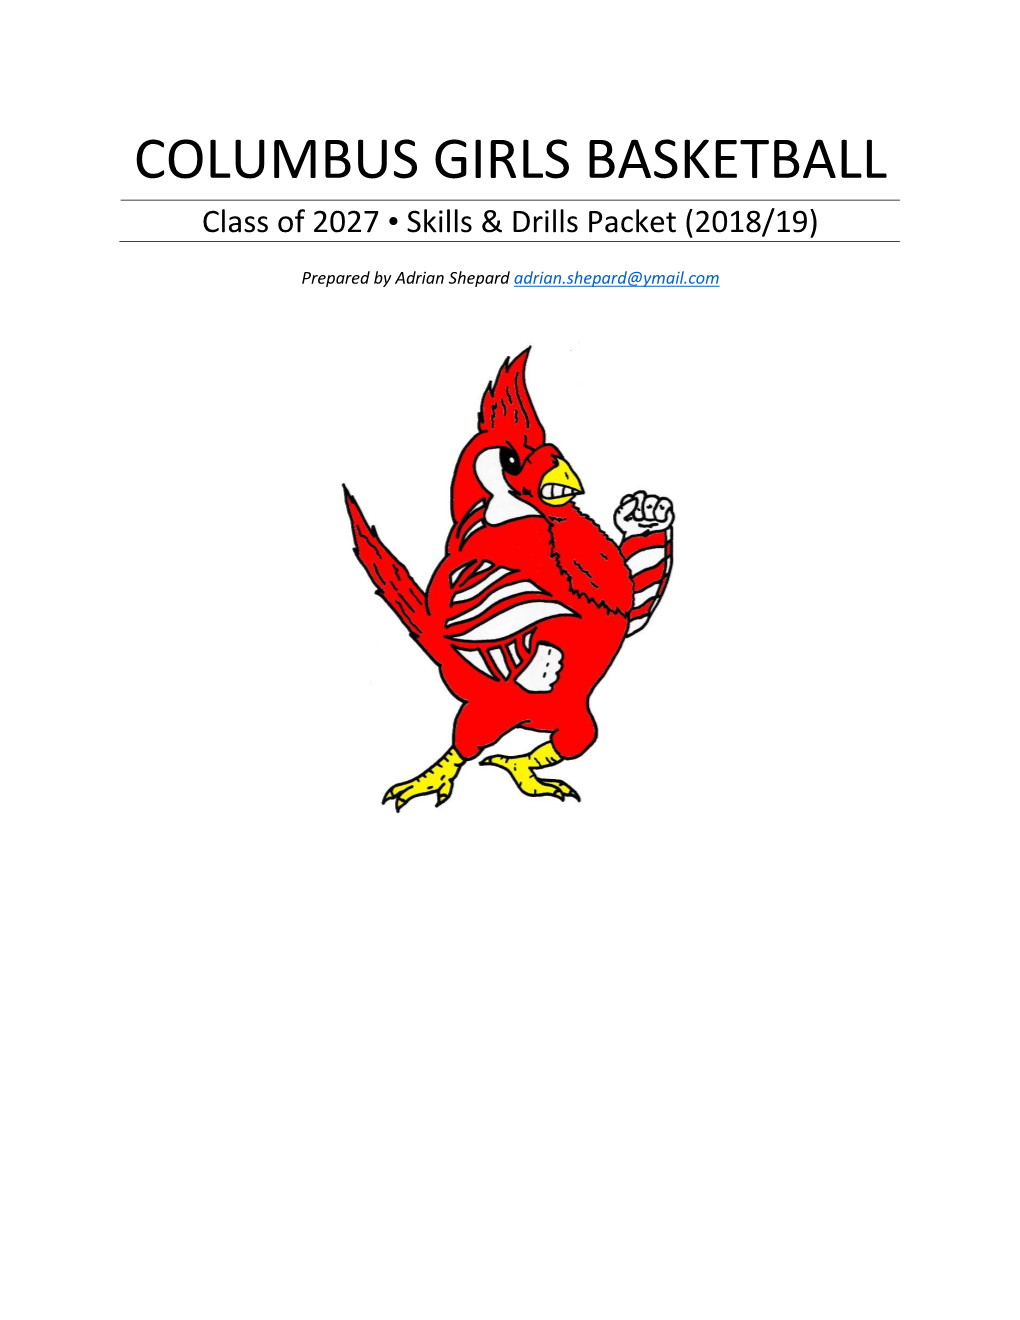 COLUMBUS GIRLS BASKETBALL Class of 2027 • Skills & Drills Packet (2018/19)